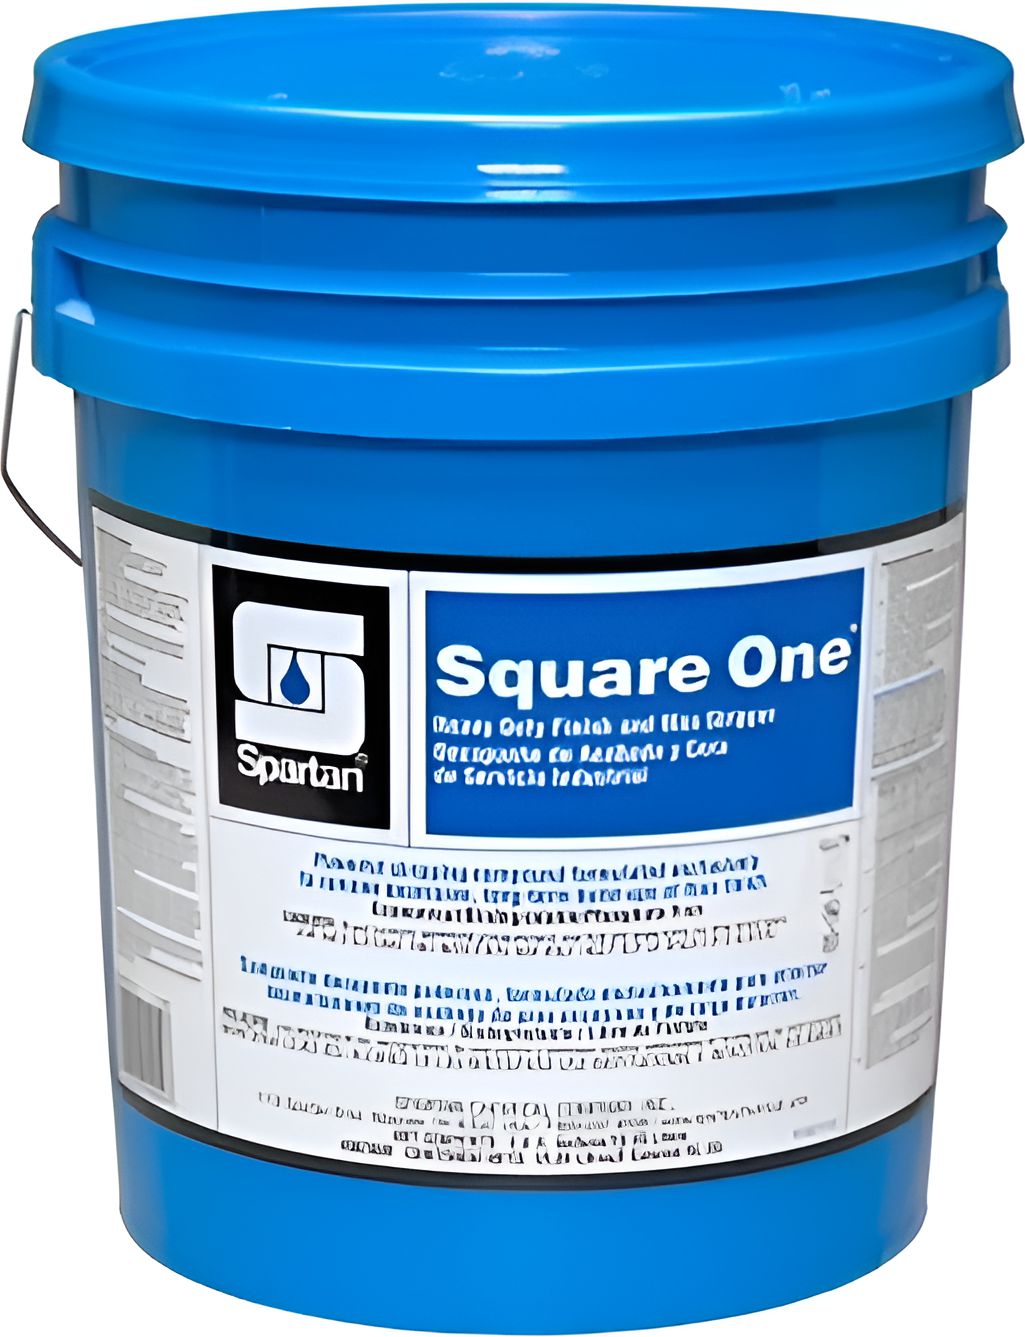 Spartan - Square One 5 Gallon Stripping Compound - 007805C